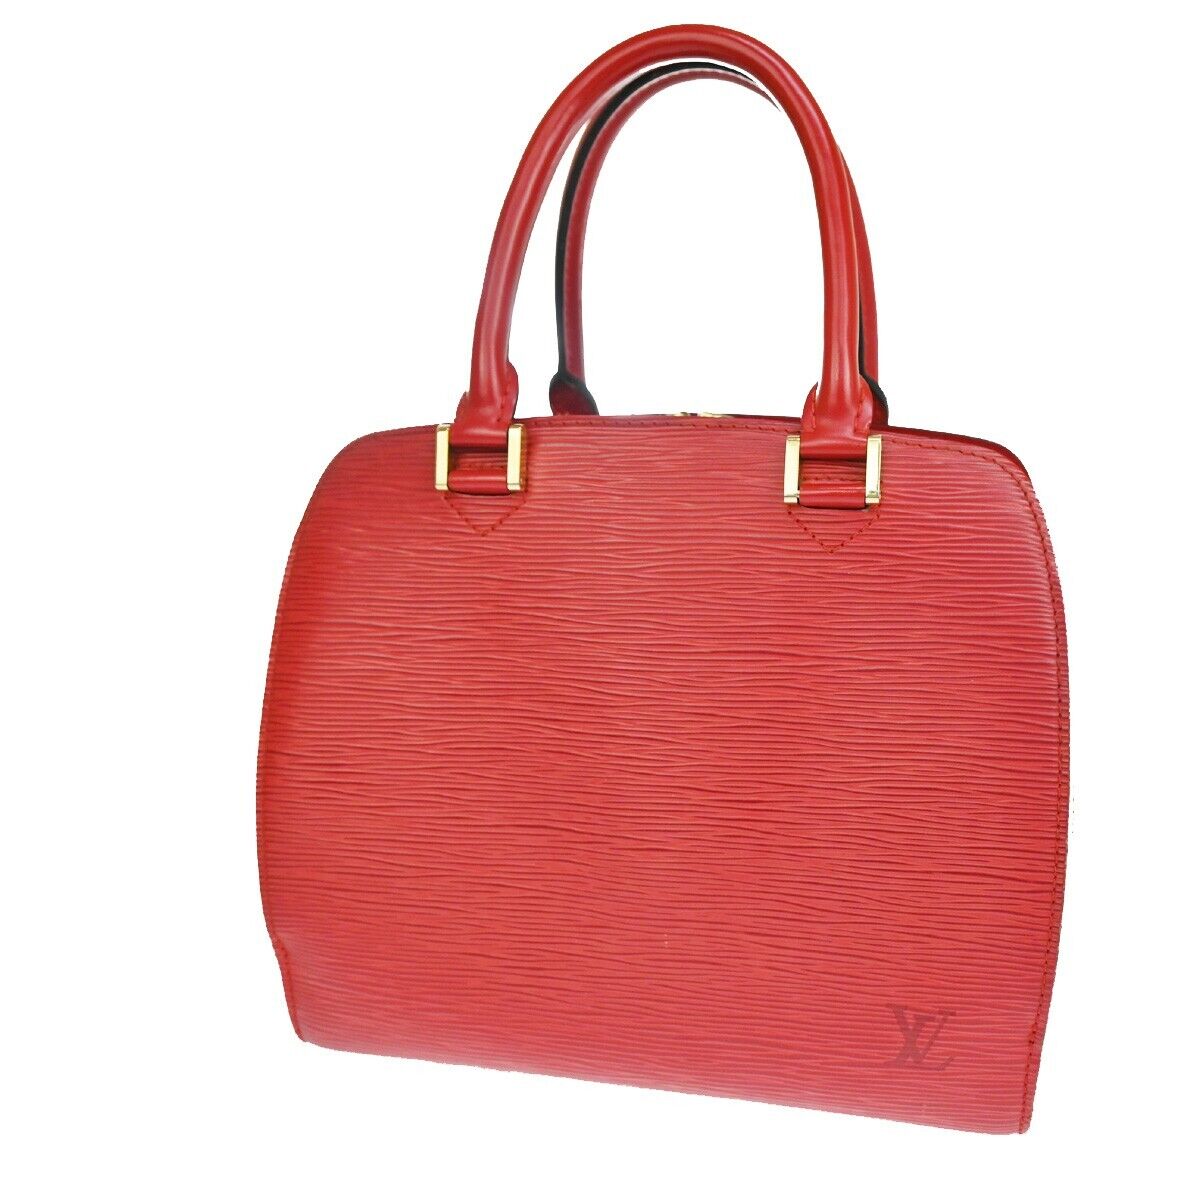 Pont 9 leather handbag